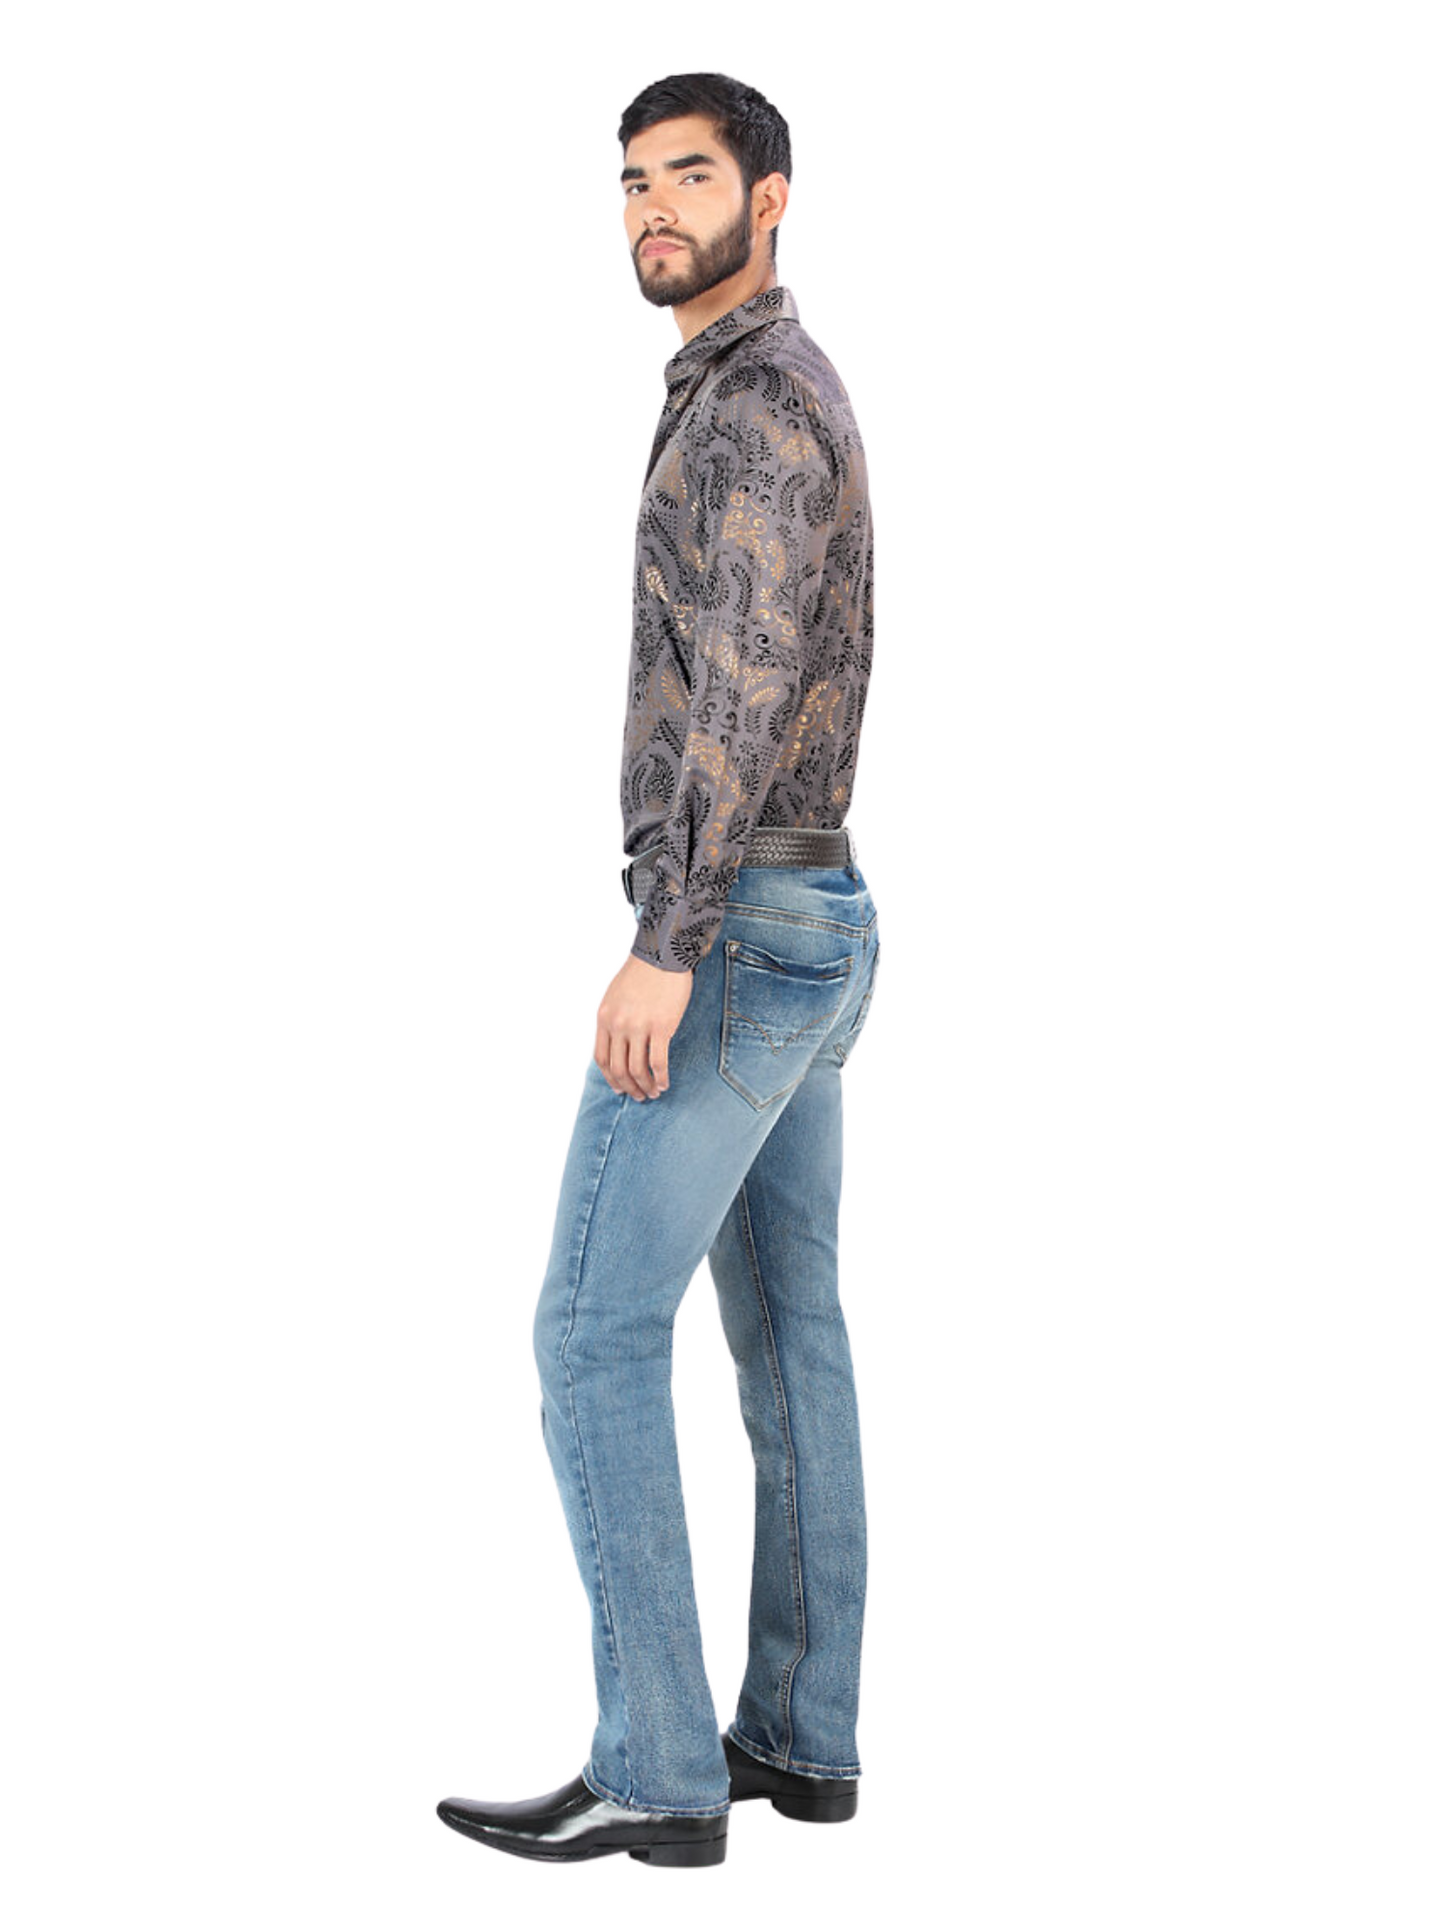 Stretch Denim Jeans for Men 'Montero' - ID: 5300 Denim Jeans Montero